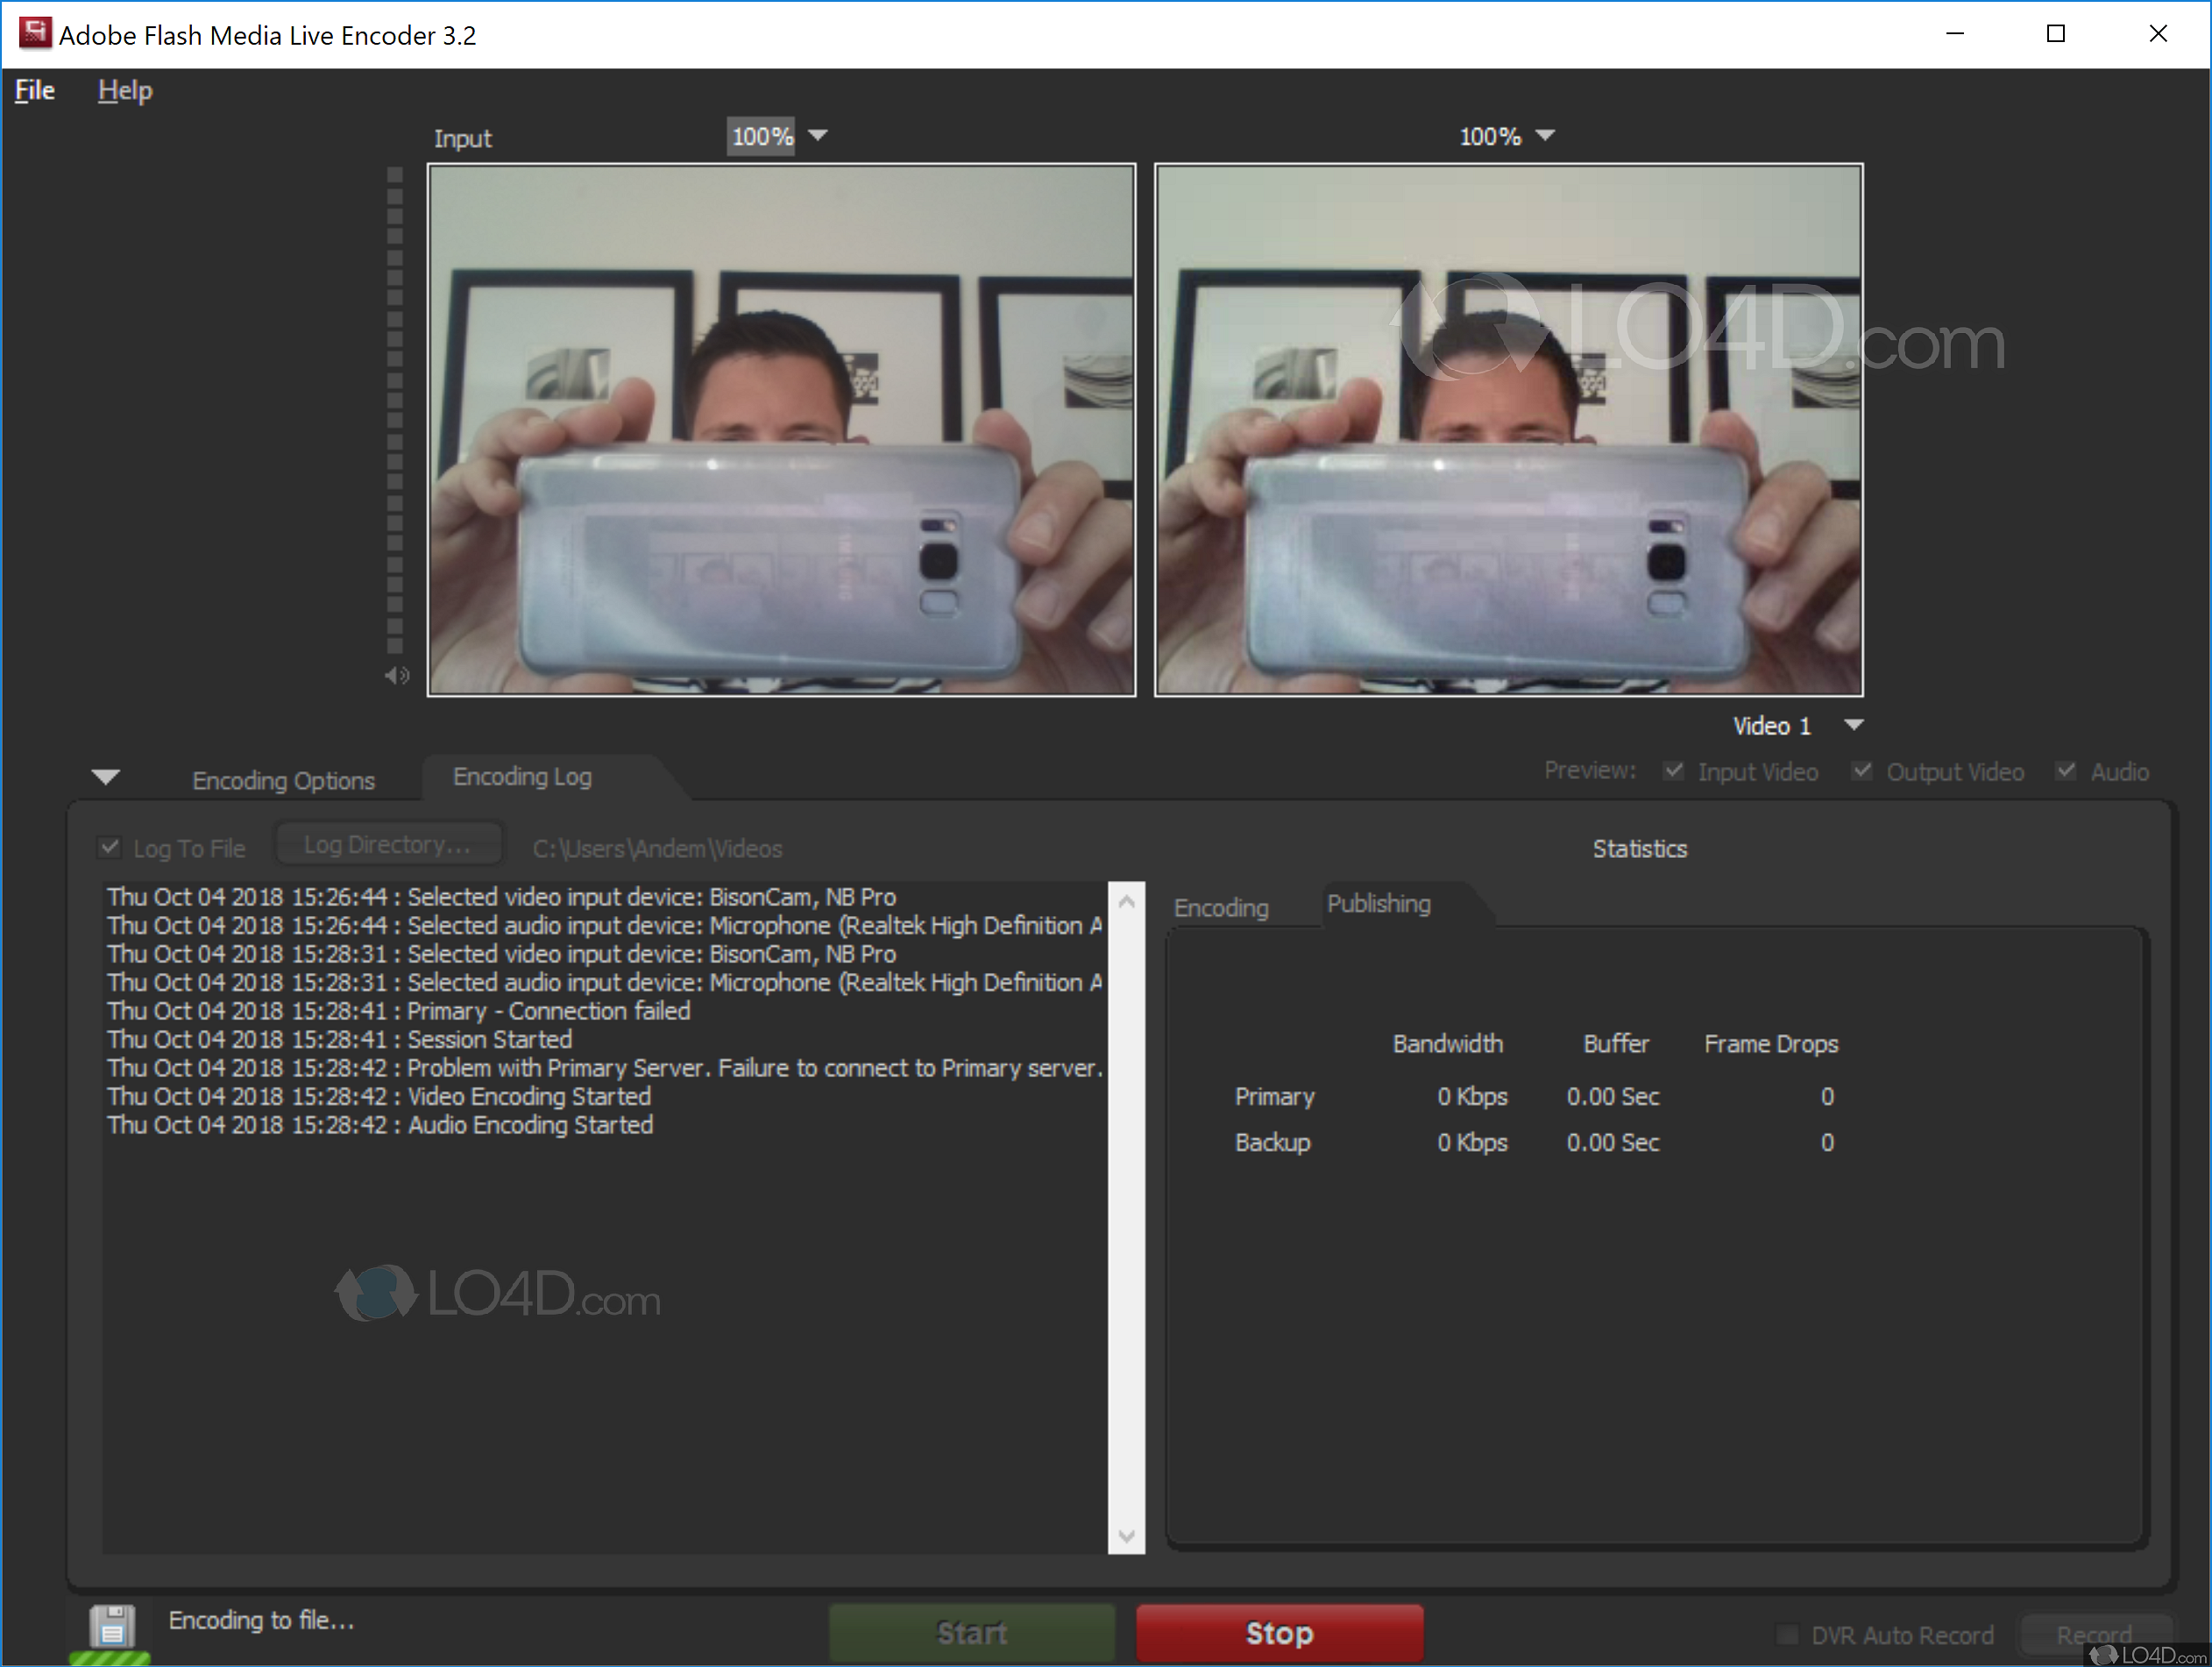 adobe flash media live encoder 3.2 free download for windows 7